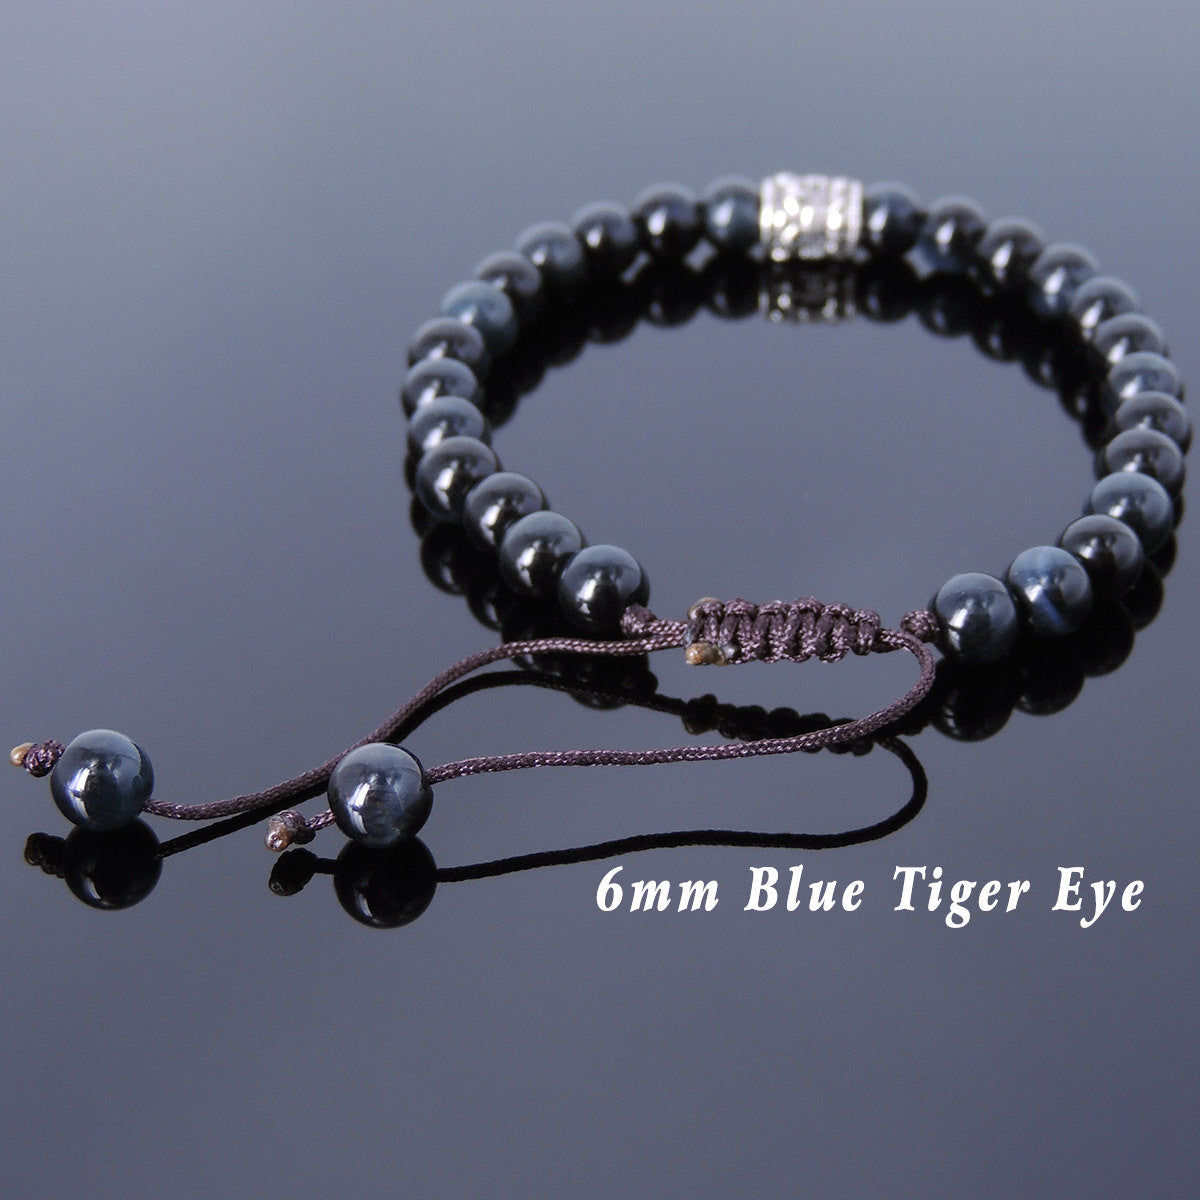 6mm Blue Tiger Eye Adjustable Braided Bracelet with S925 Sterling Silver Fleur de Lis Barrel Bead - Handmade by Gem & Silver BR777